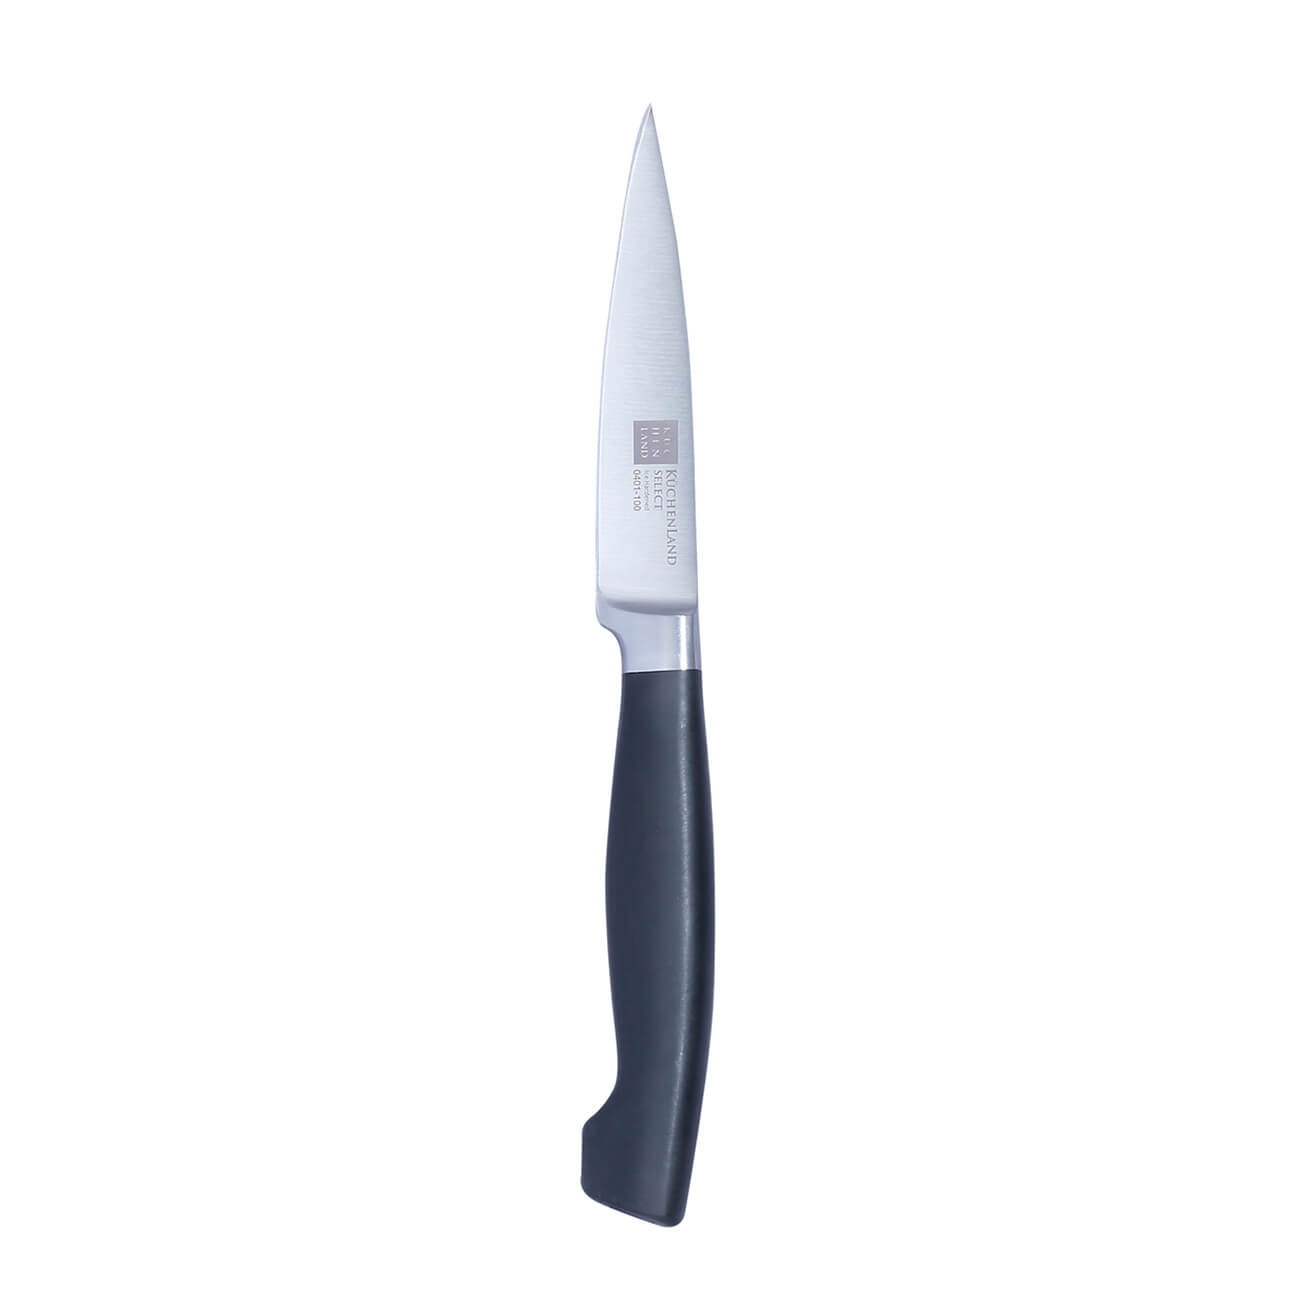 Нож для чистки овощей, 10 см, сталь/пластик, Select